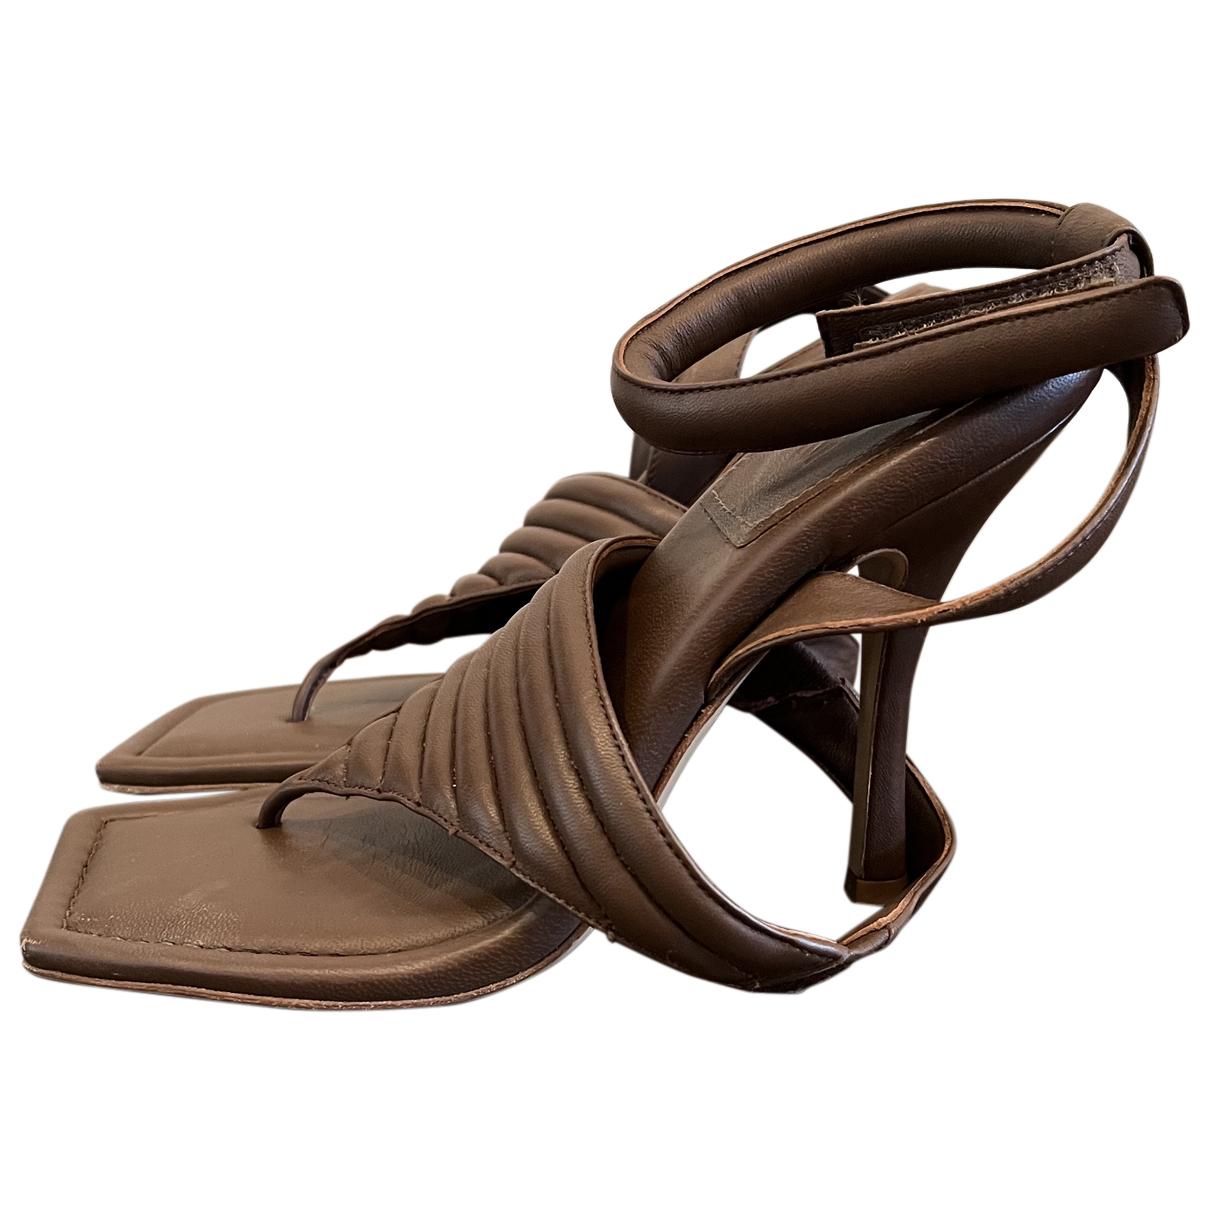 Pony-style calfskin sandals